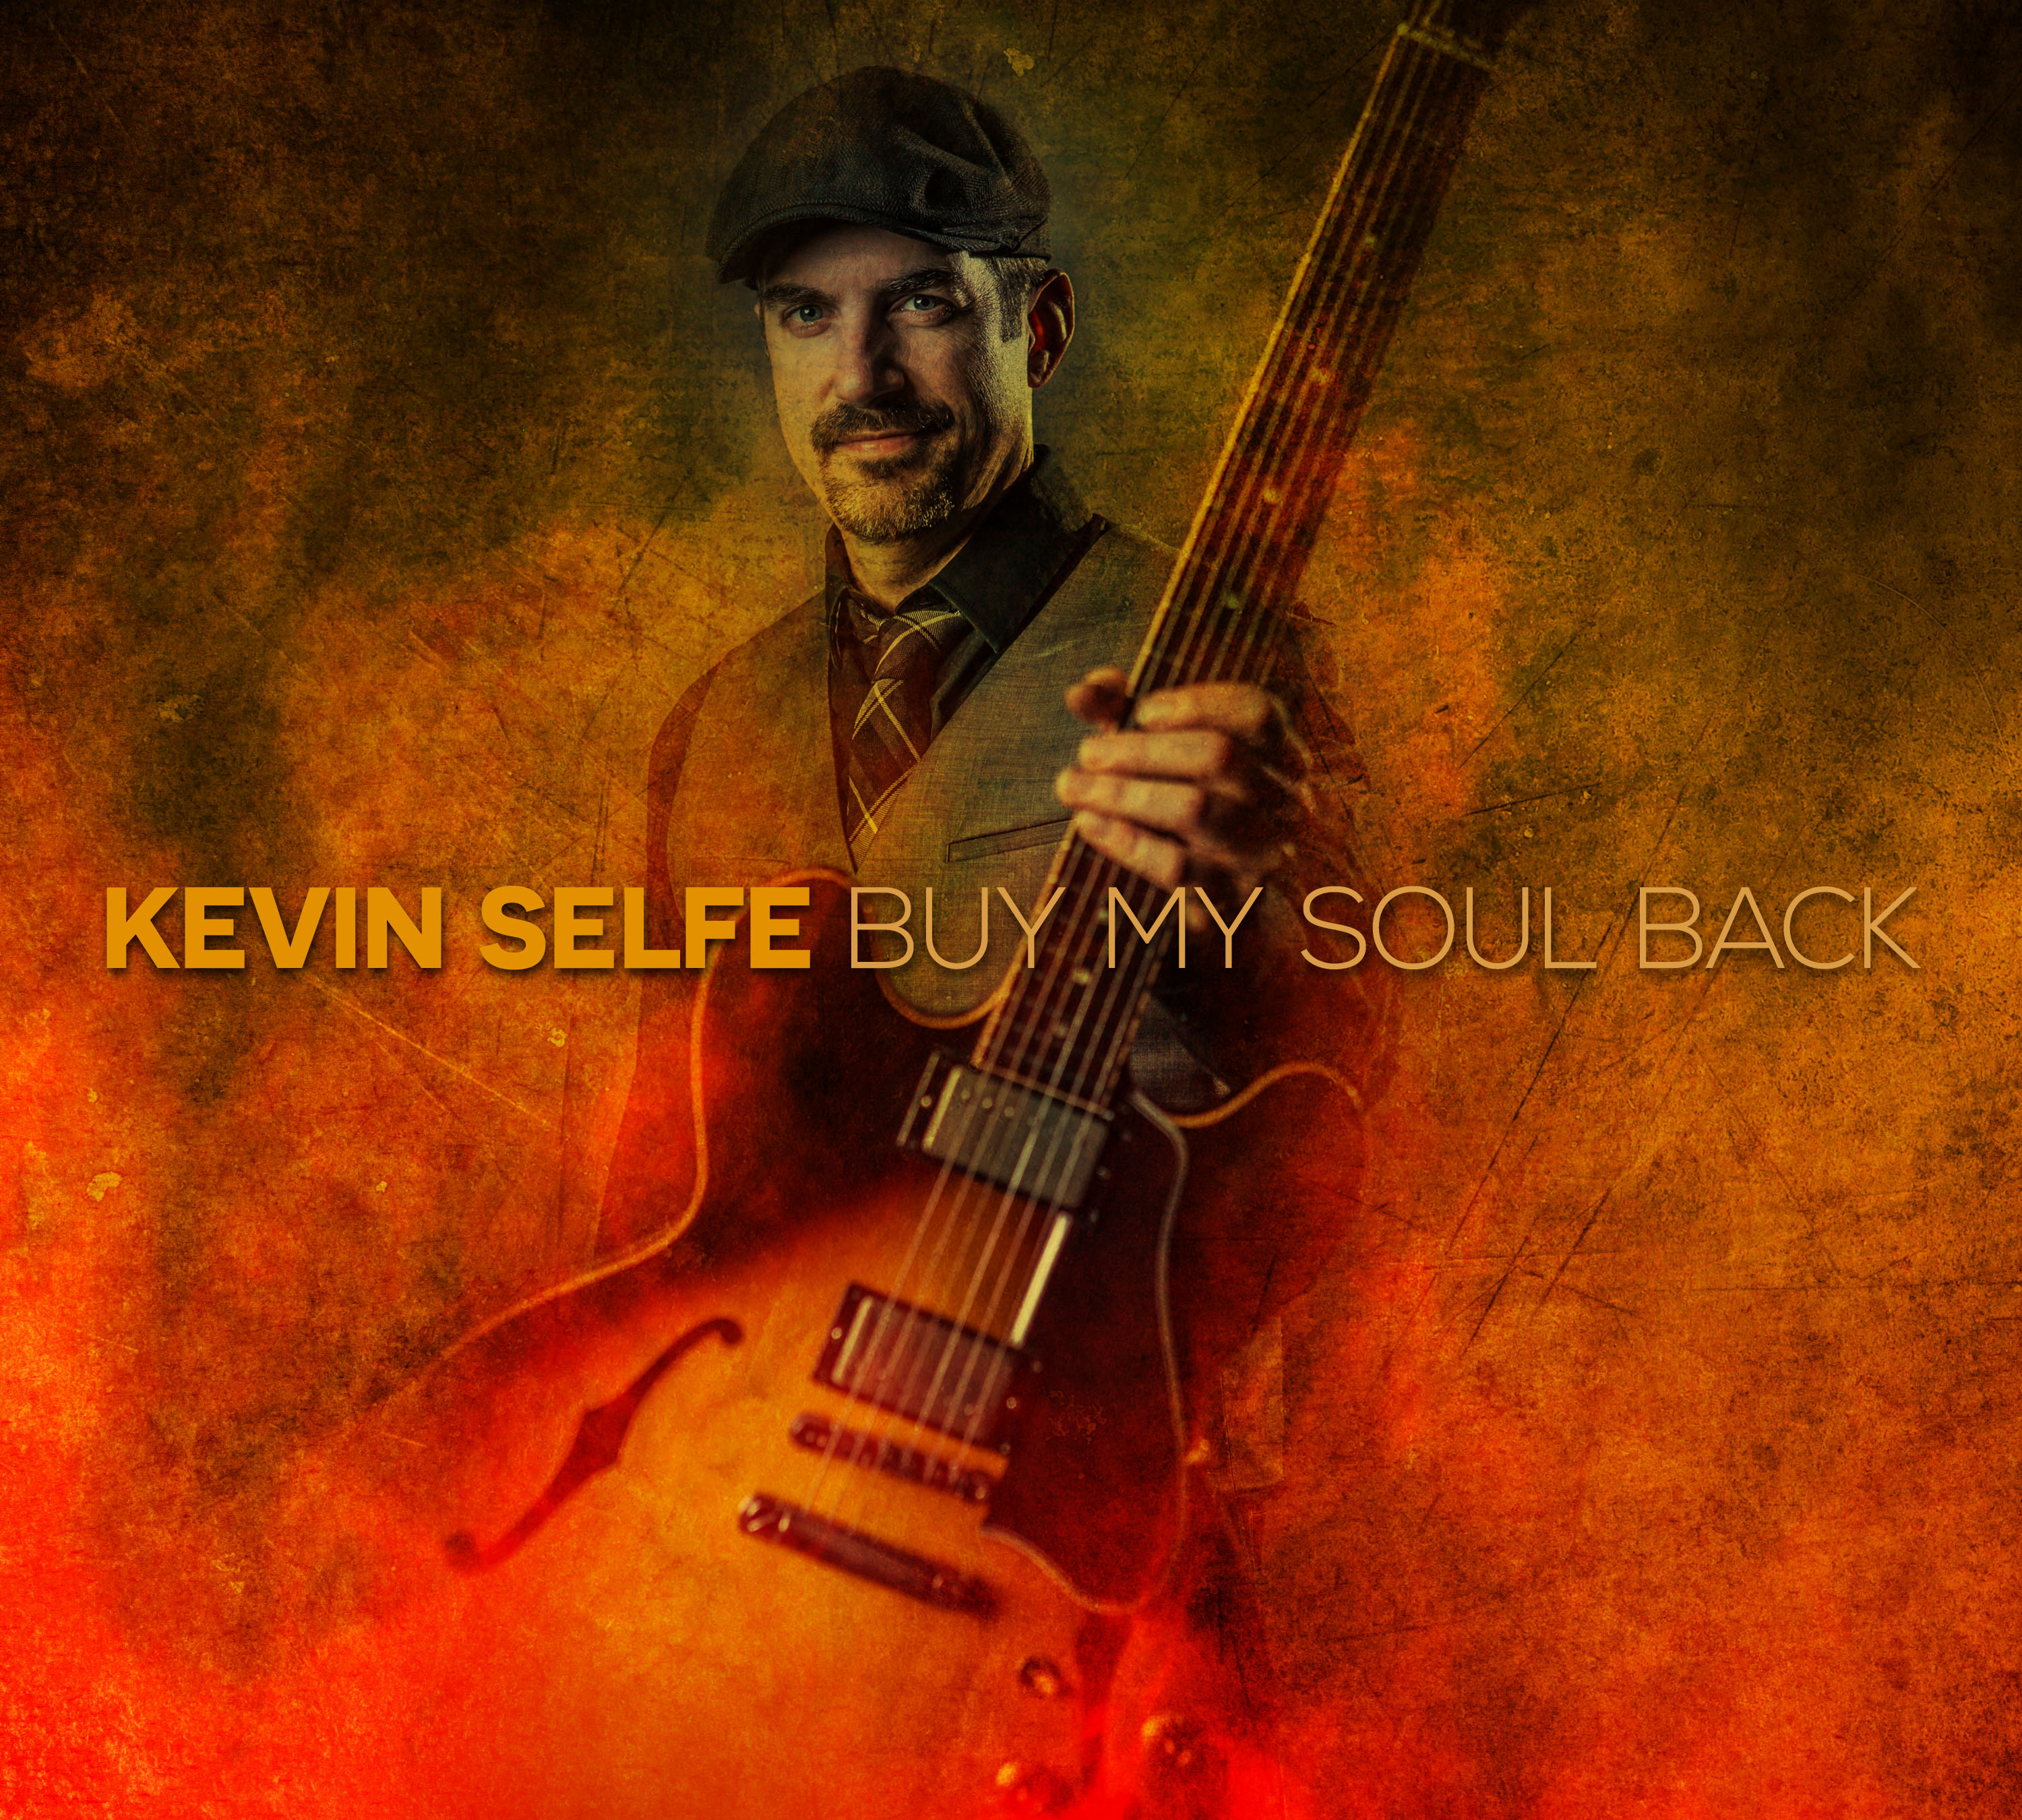 Blues Blast Magazine CD Review of “Buy My Soul Back”, Oct 29, 2015